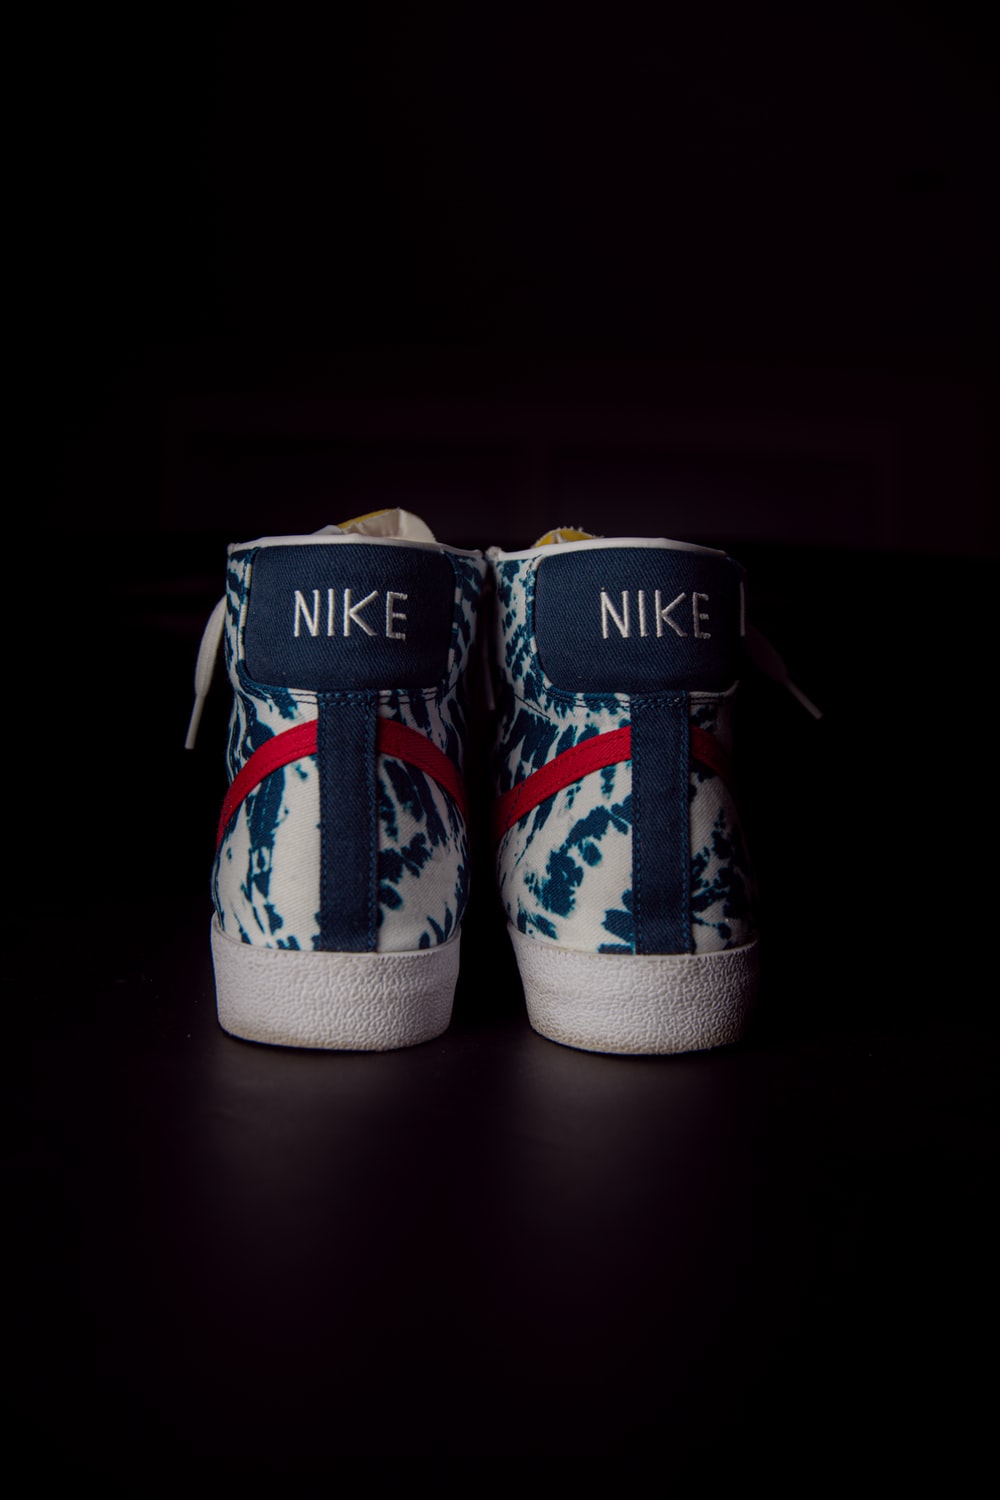 Nike Blazer Picture. Download Free Image